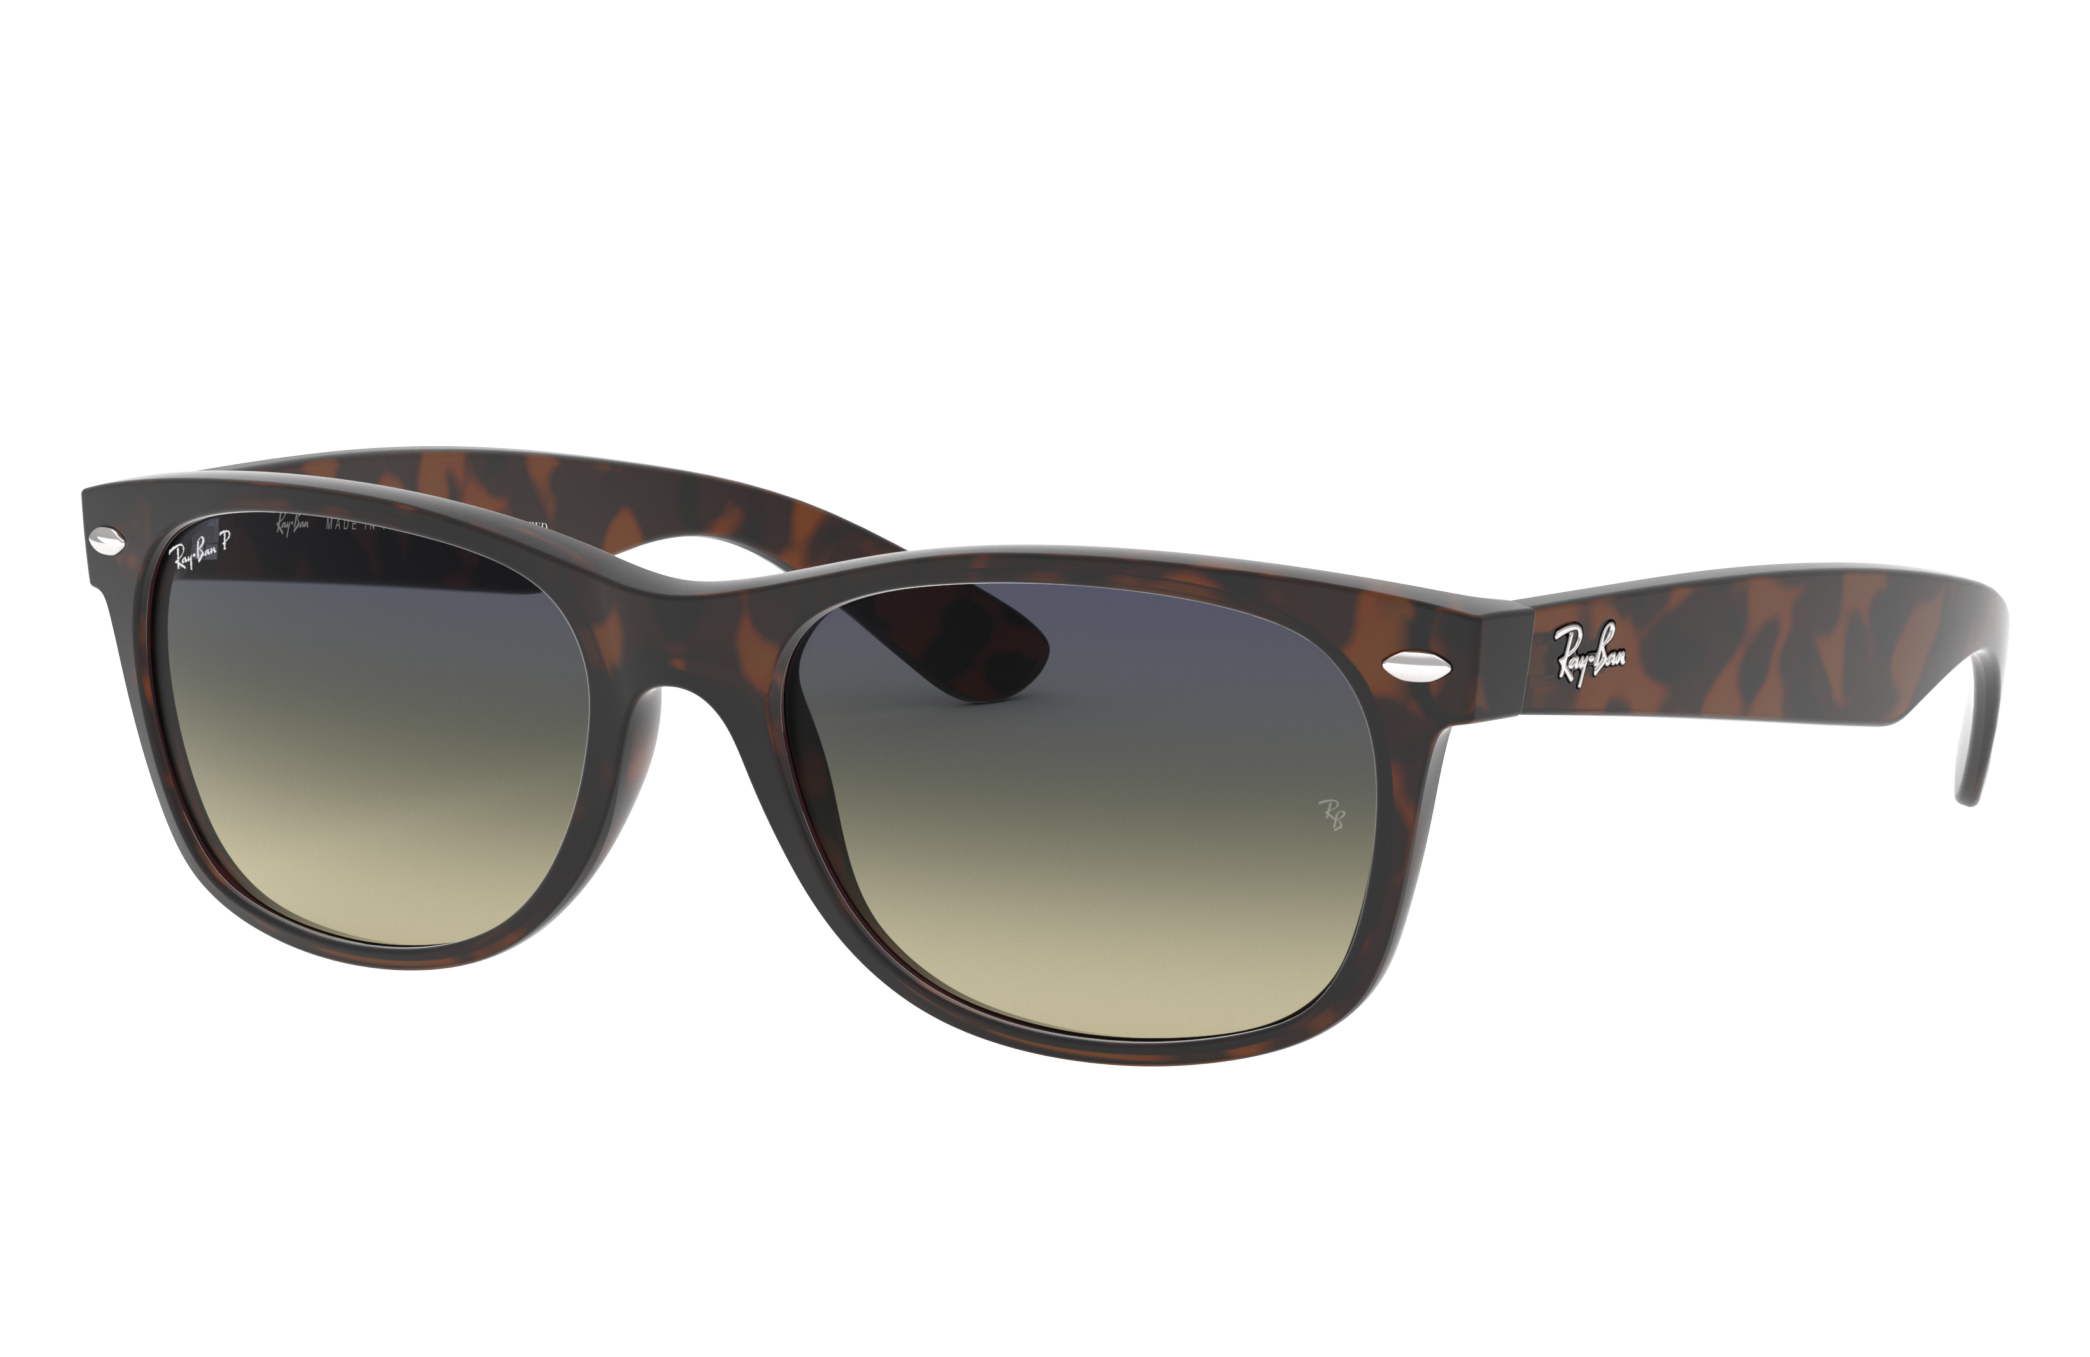 New Wayfarer Matte Sunglasses in Tortoise and Blue/Green | Ray-Ban®